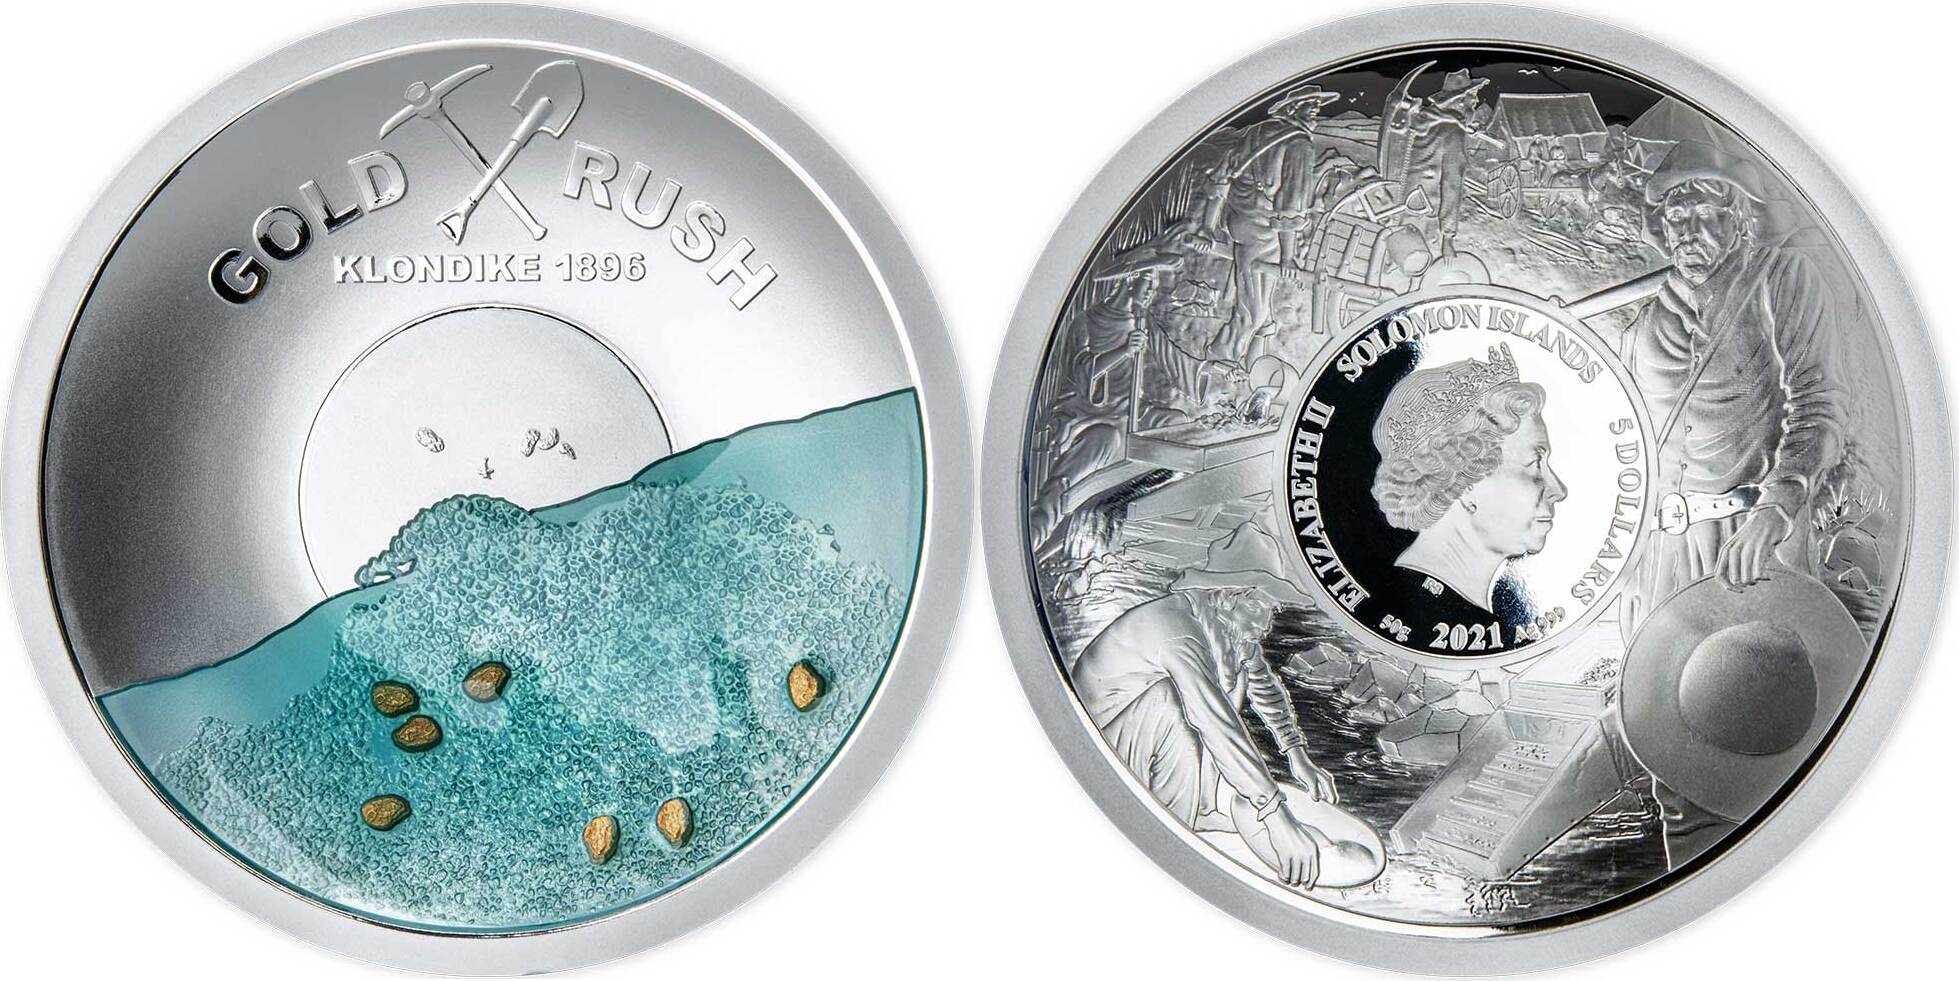 Rush coin